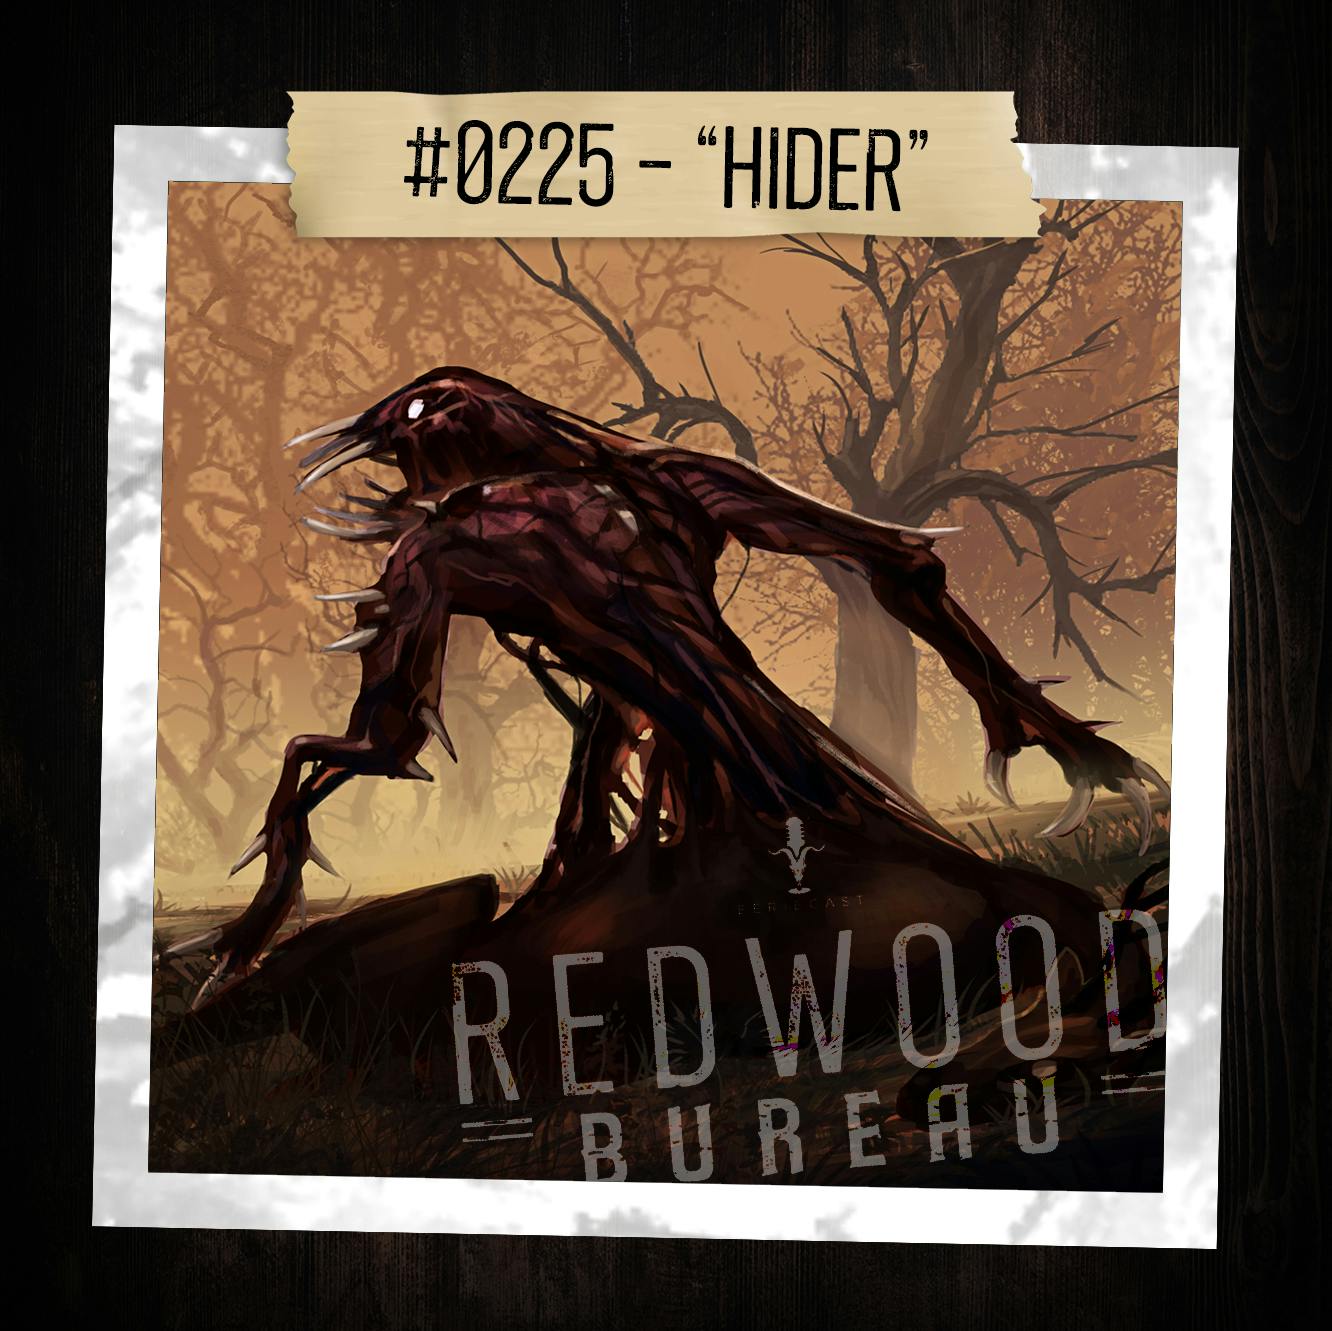 "HIDER" - Redwood Bureau Phenomenon #0225